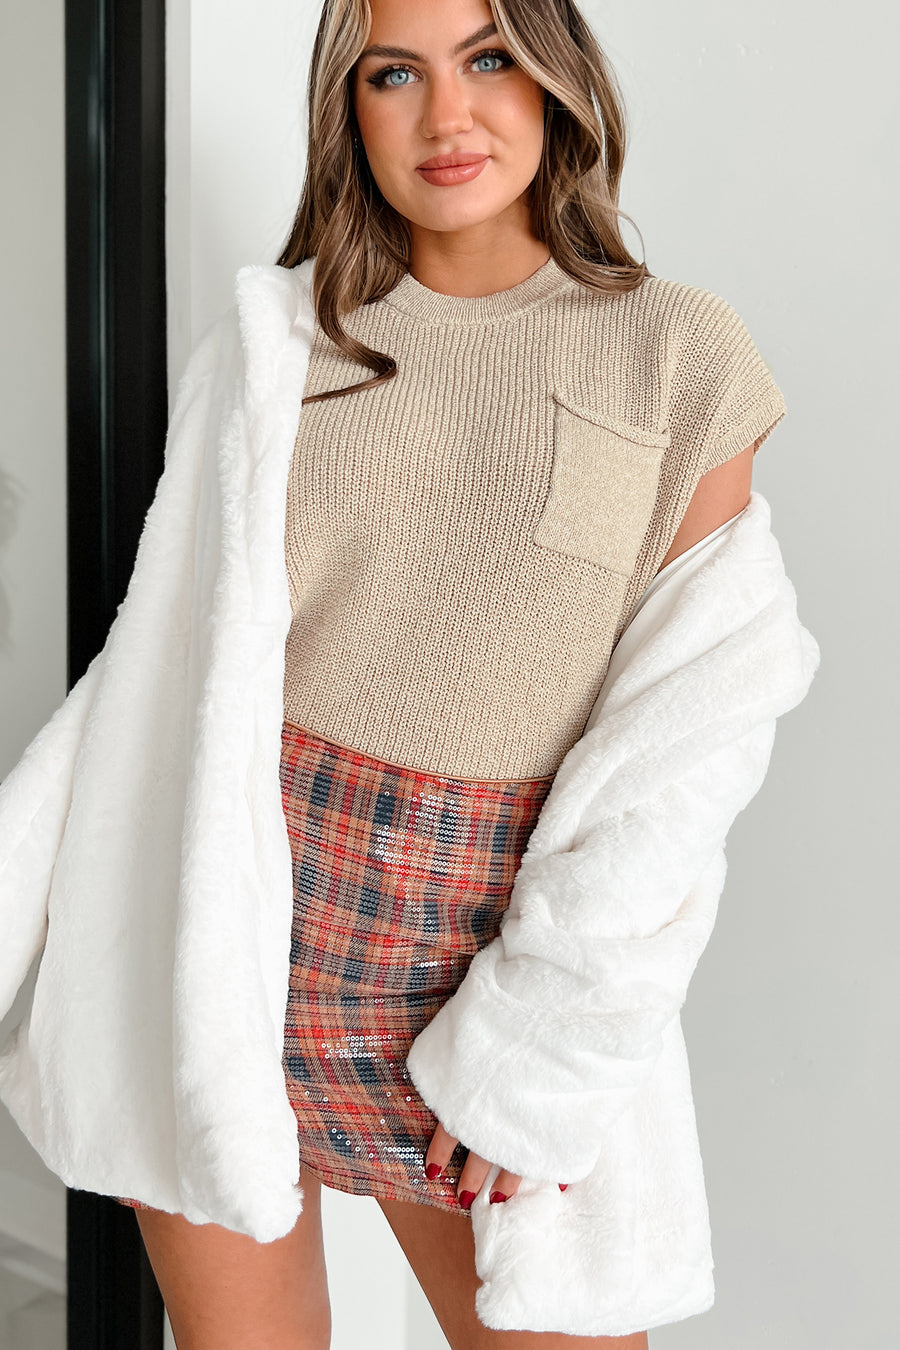 Business As Usual Short Sleeve Crop Sweater (Natural) - NanaMacs